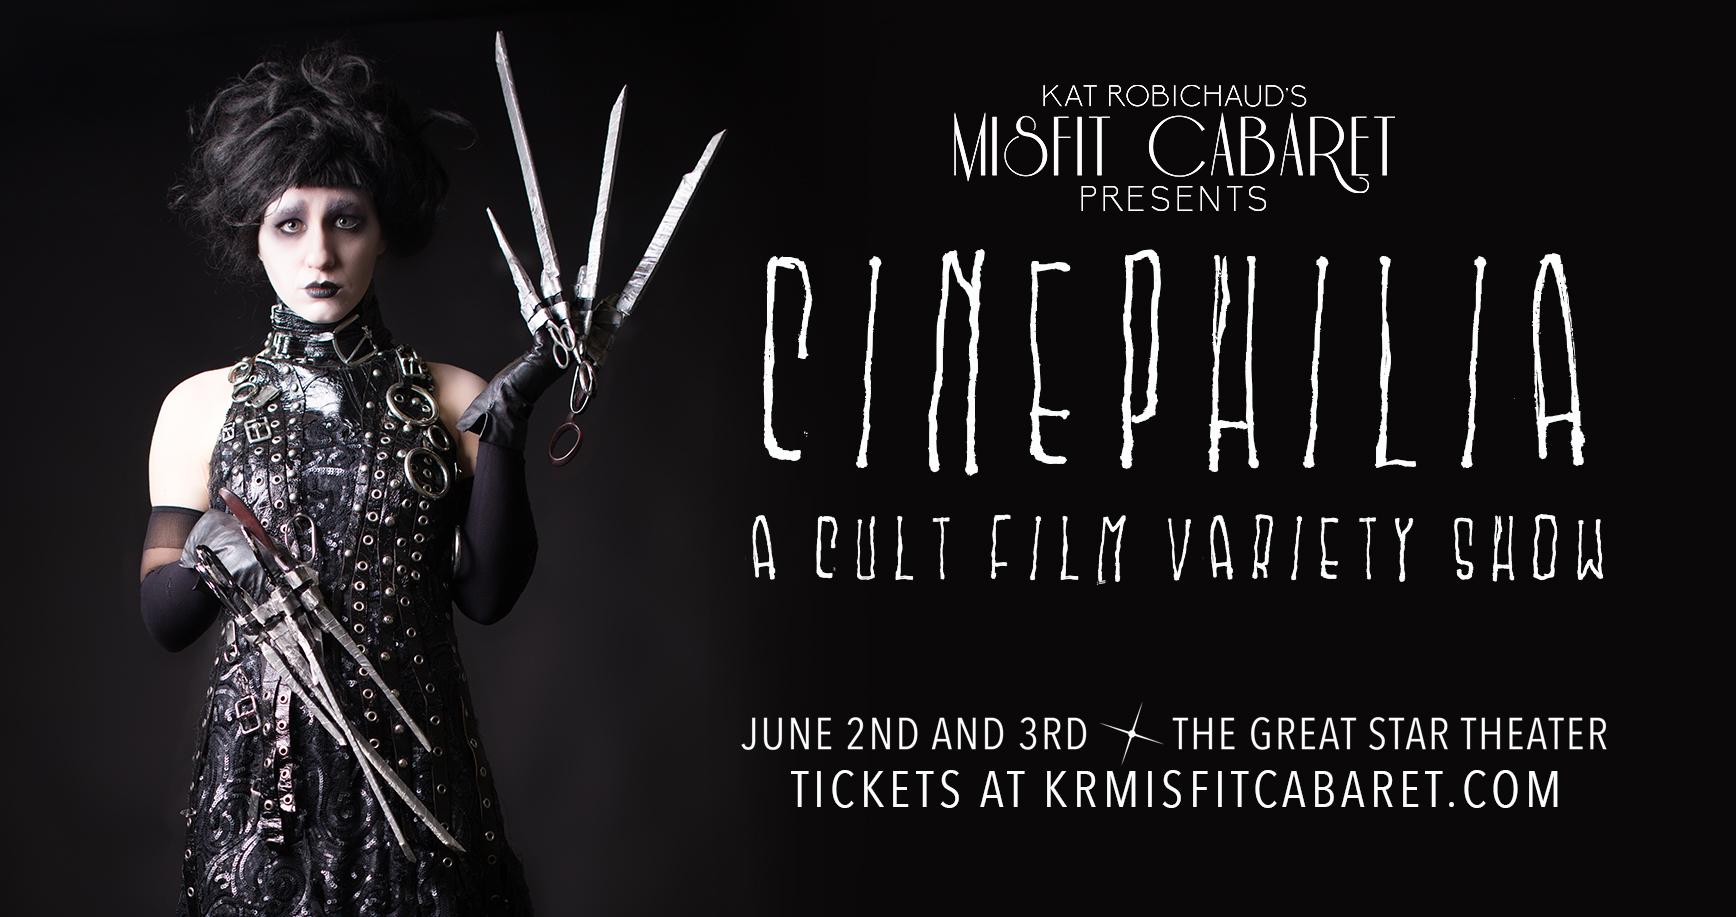 Kat Robichaud's Misfit Cabaret Presents: Cinephilia 